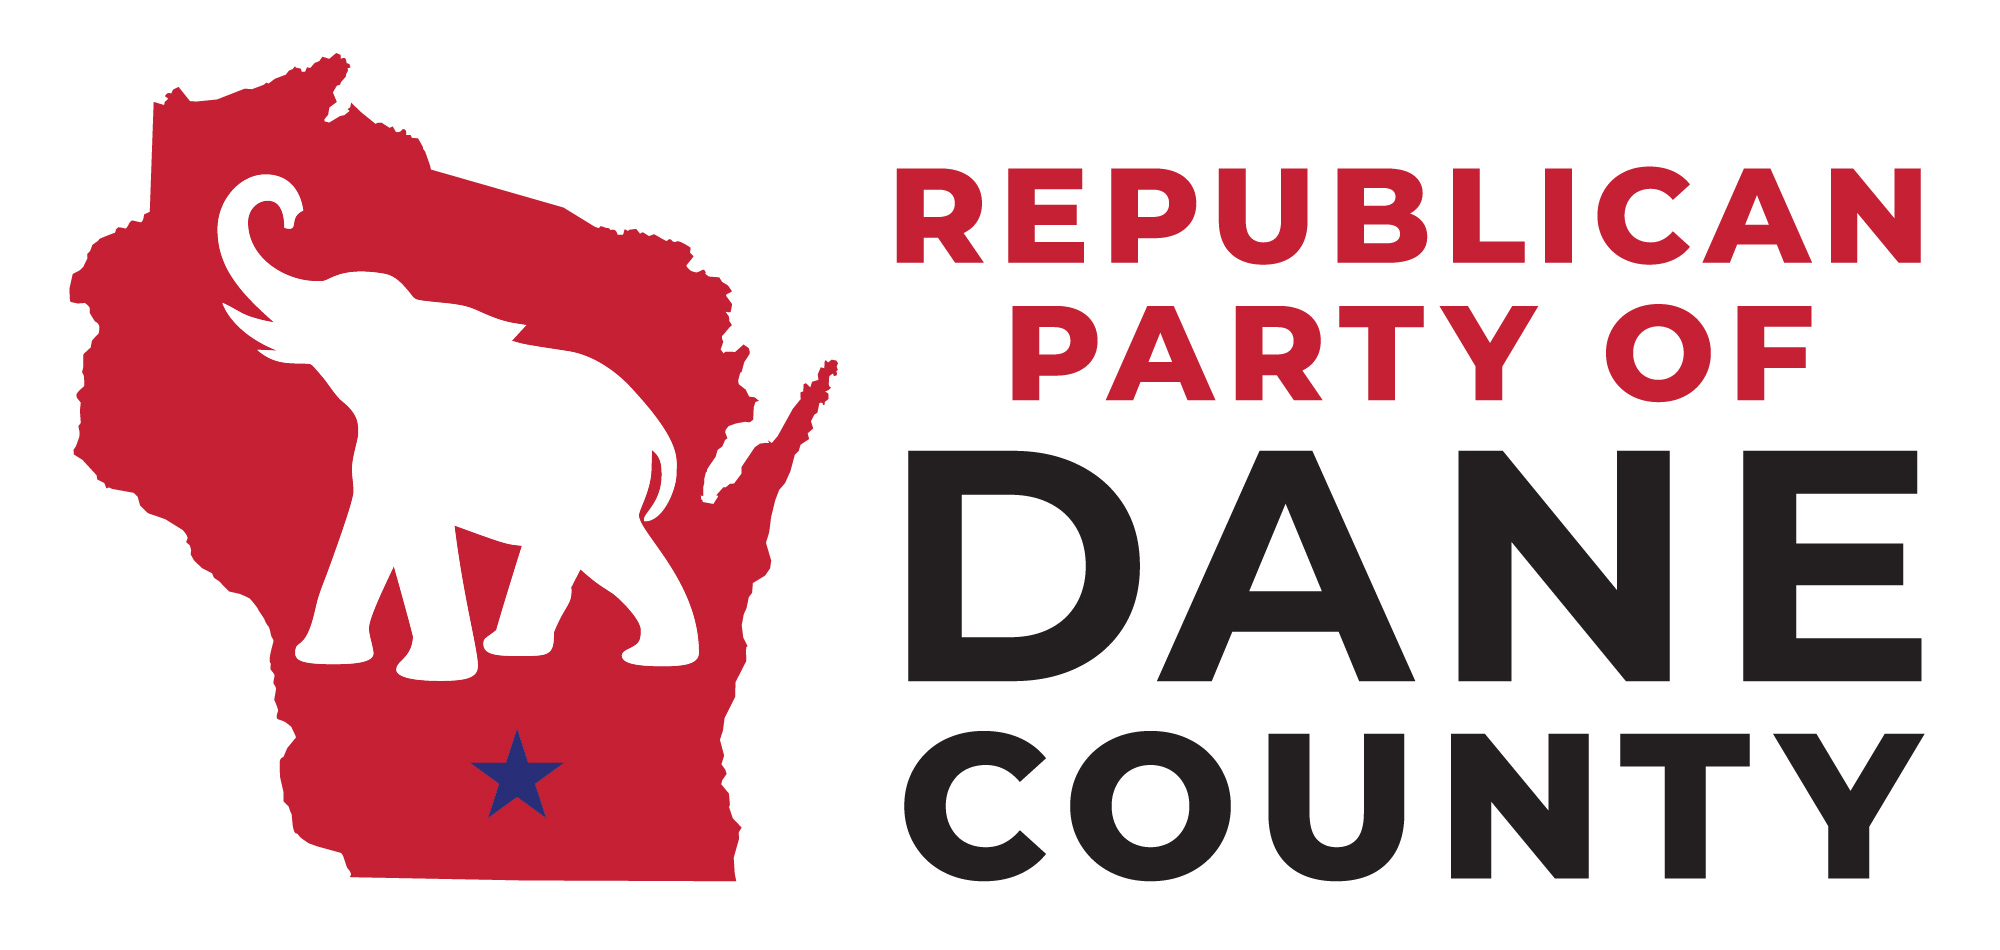 Republican Party of Dane County